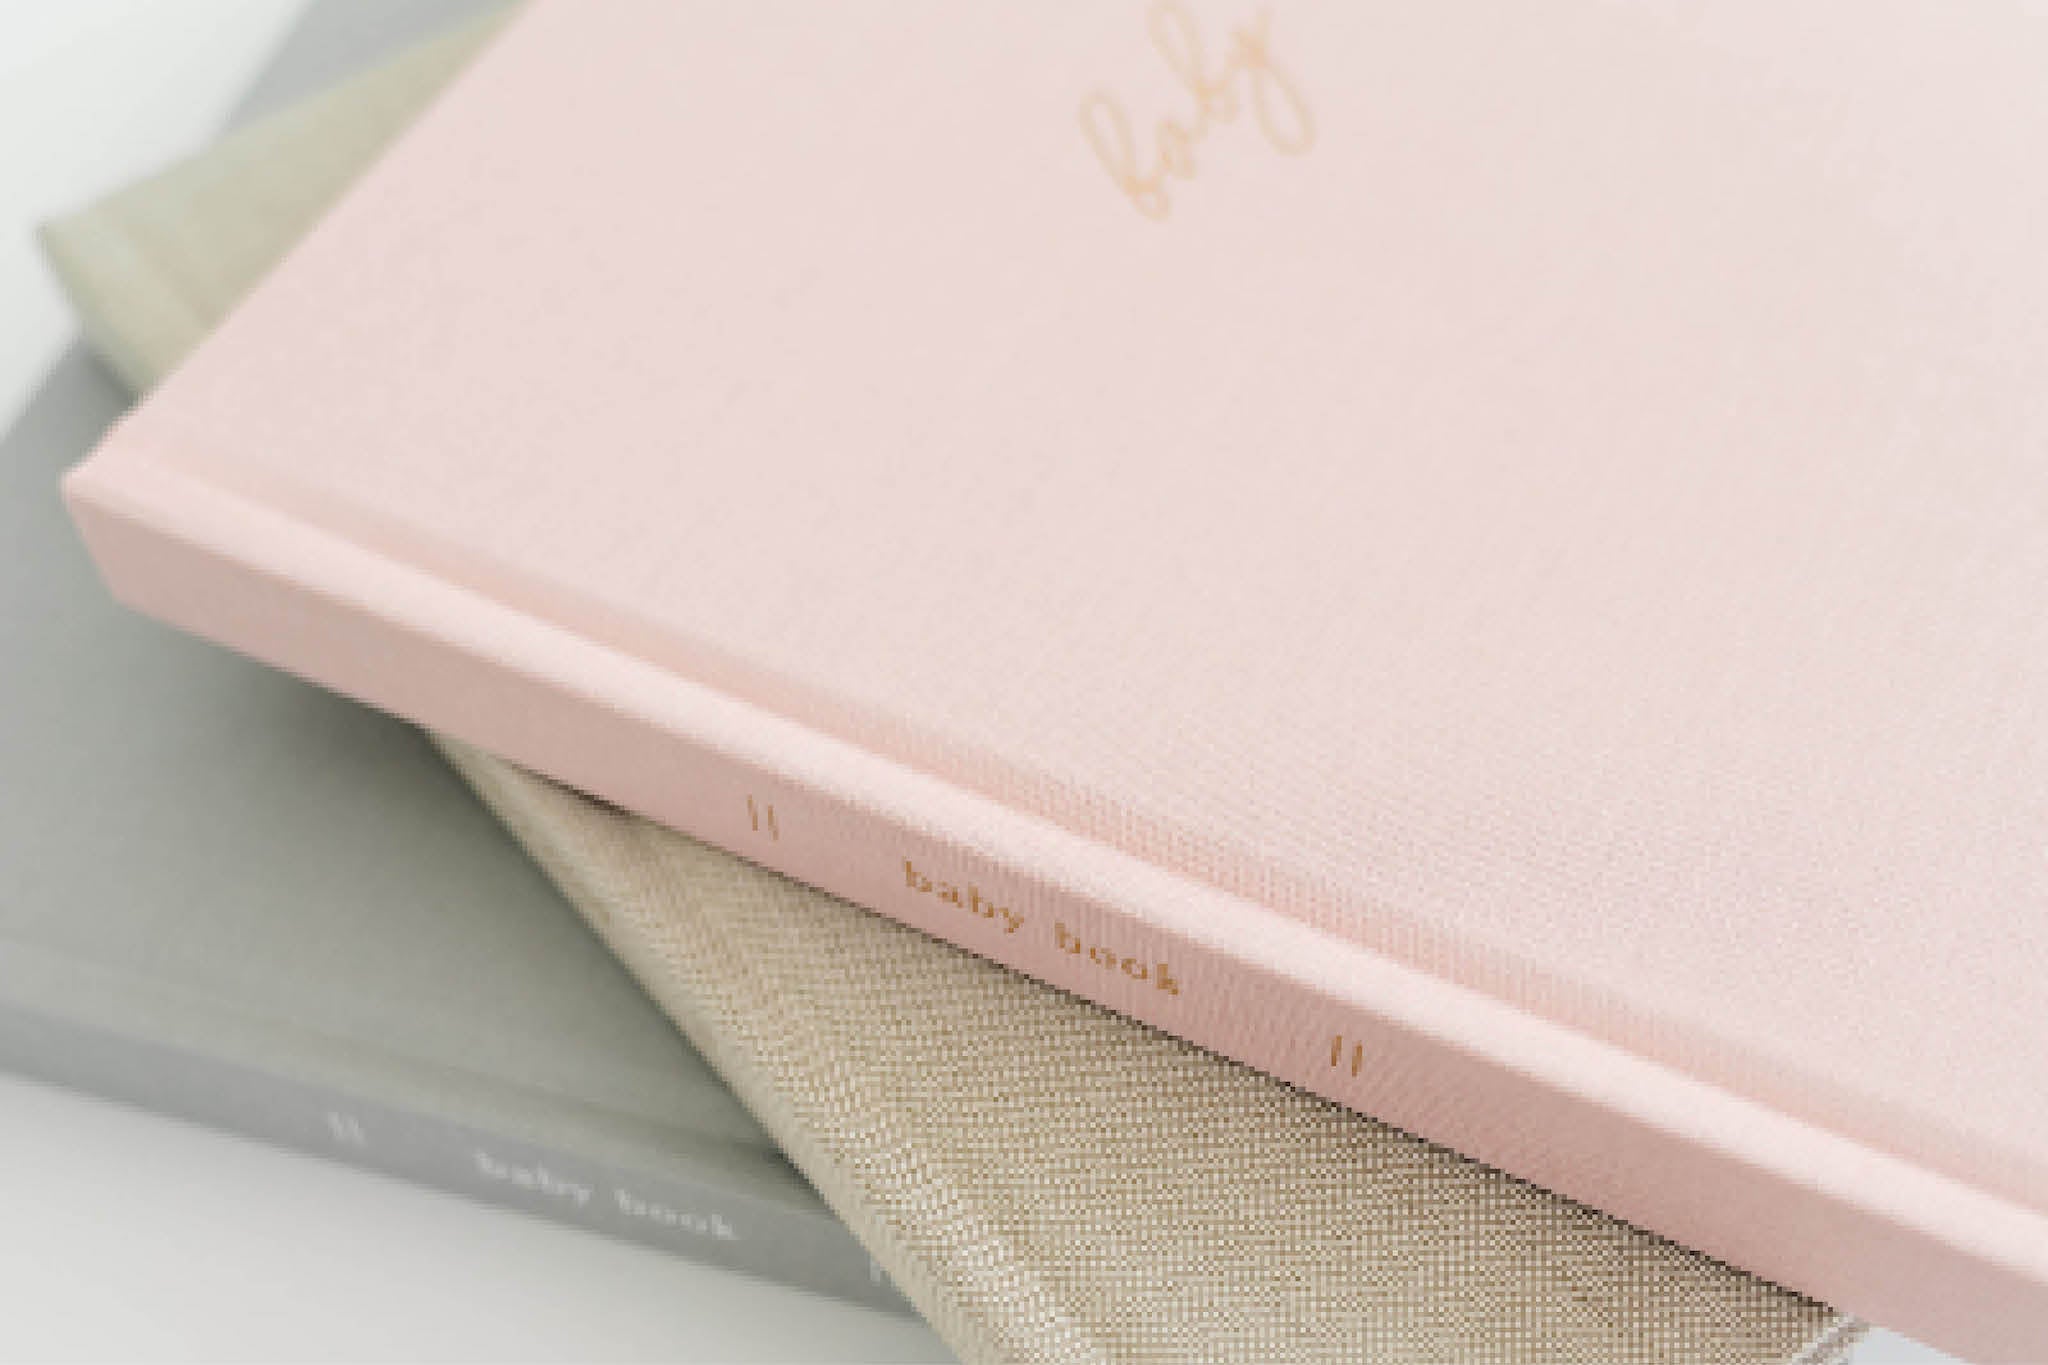 Linen Baby Book - Blush